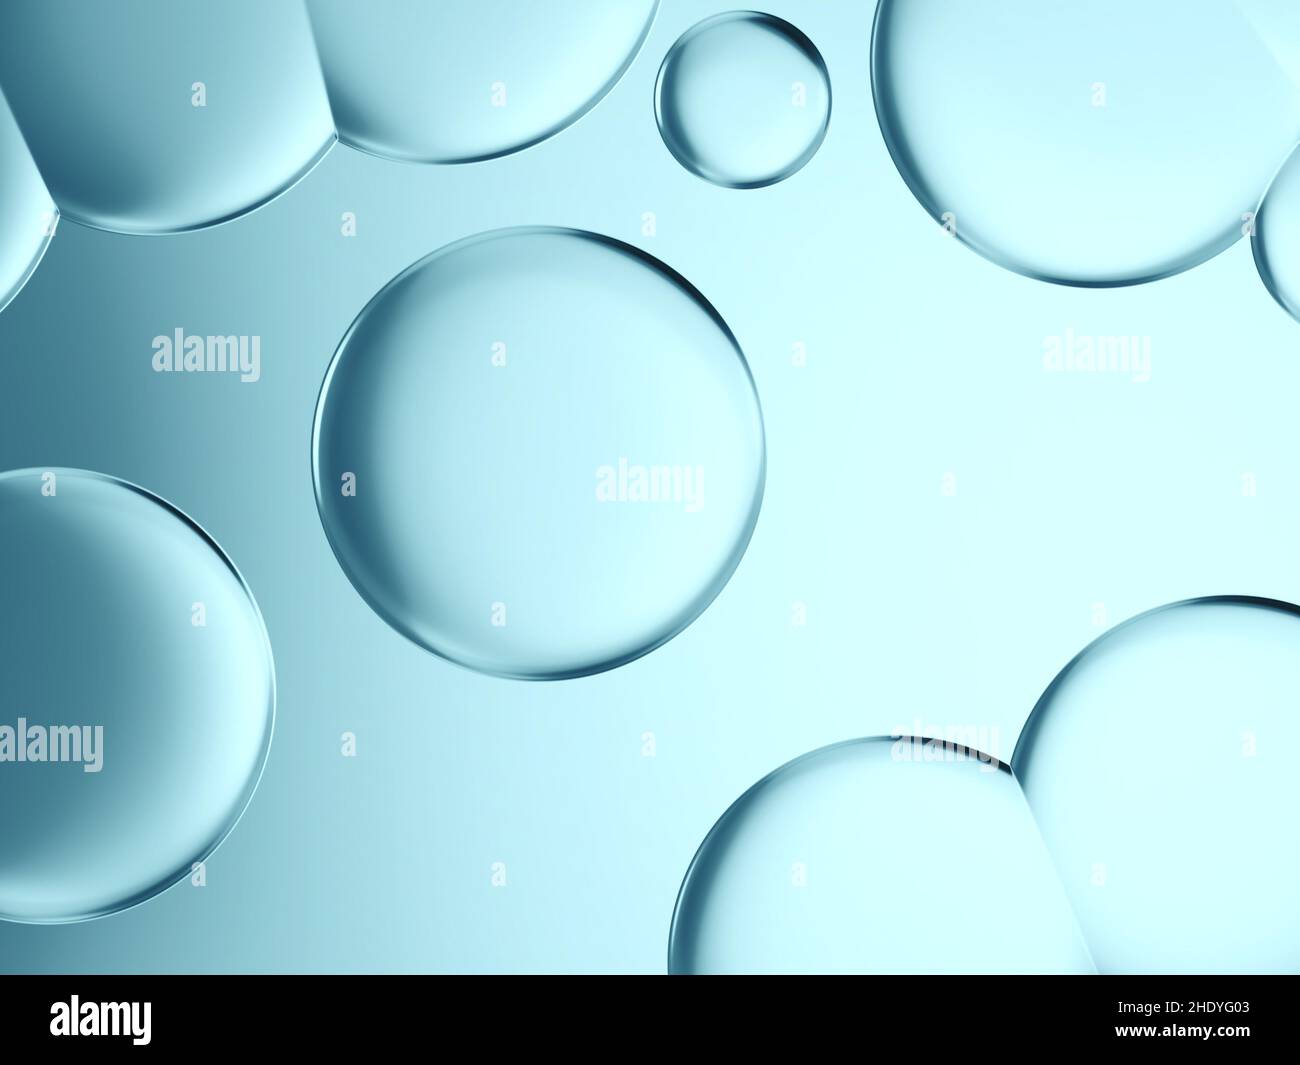 cerchio, bolle, bolle d'acqua, trasparente, cerchi, bolla, bolla d'acqua,  trasparenti Foto stock - Alamy